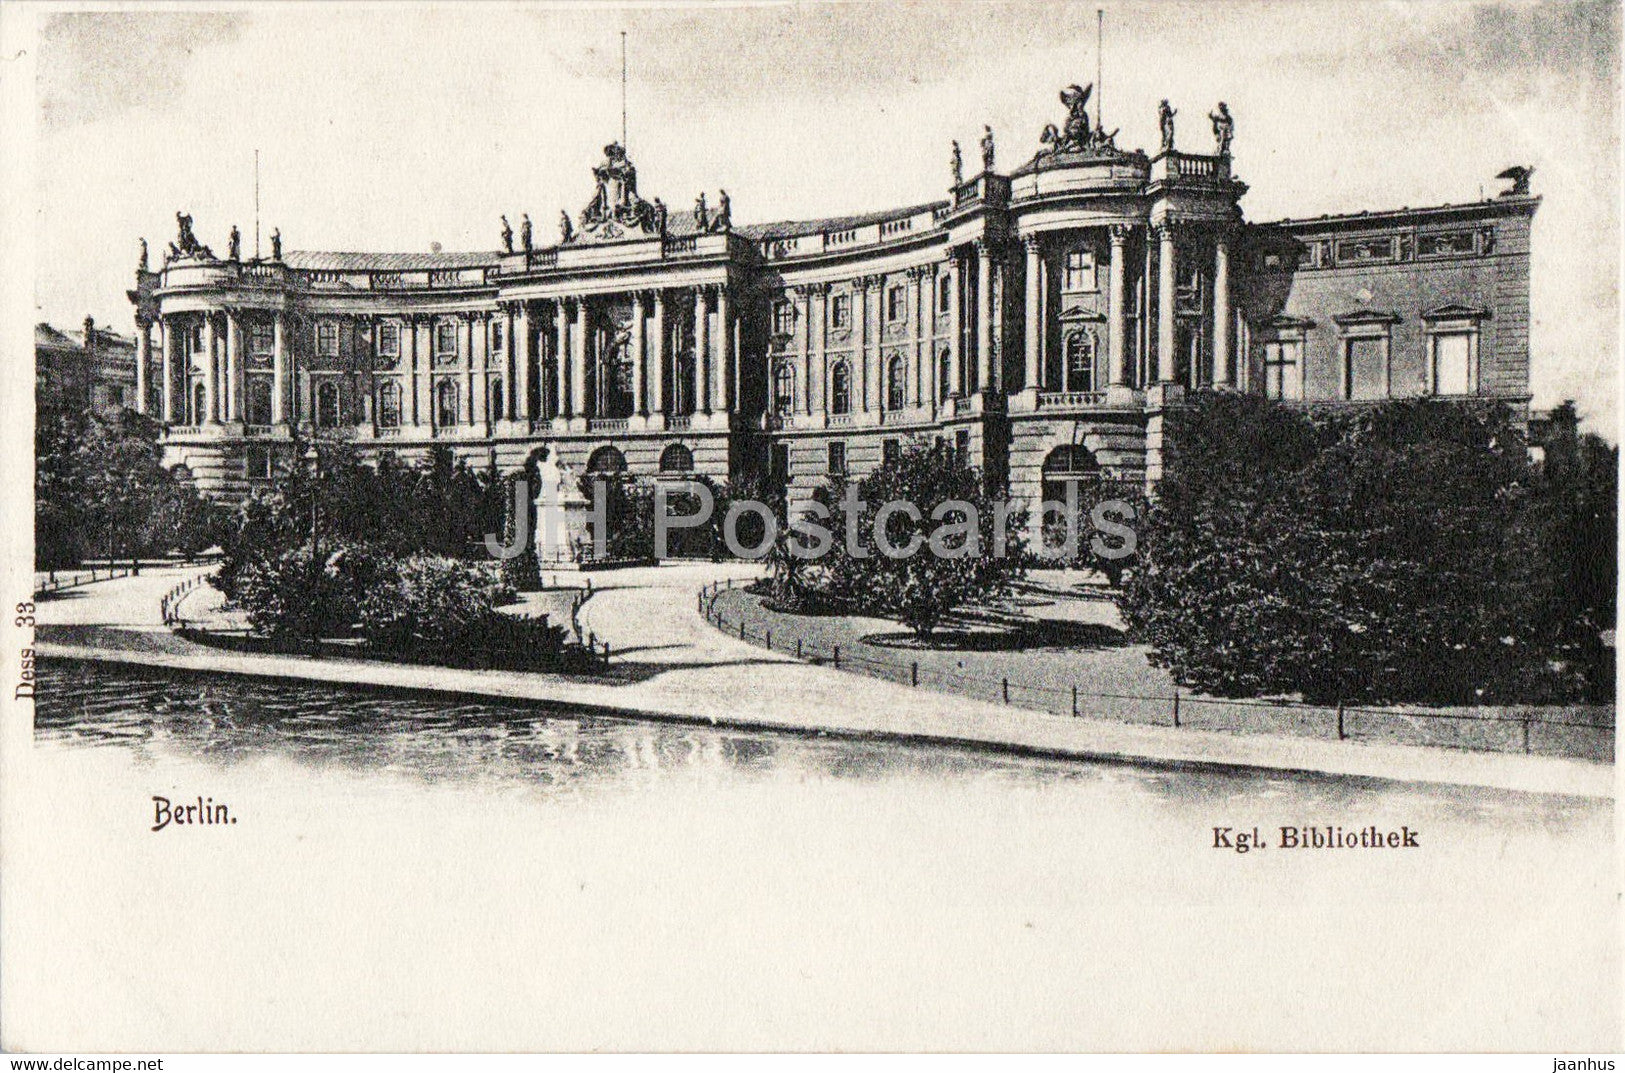 Berlin - Kgl Bibliothek - library - old postcard - Germany - unused - JH Postcards